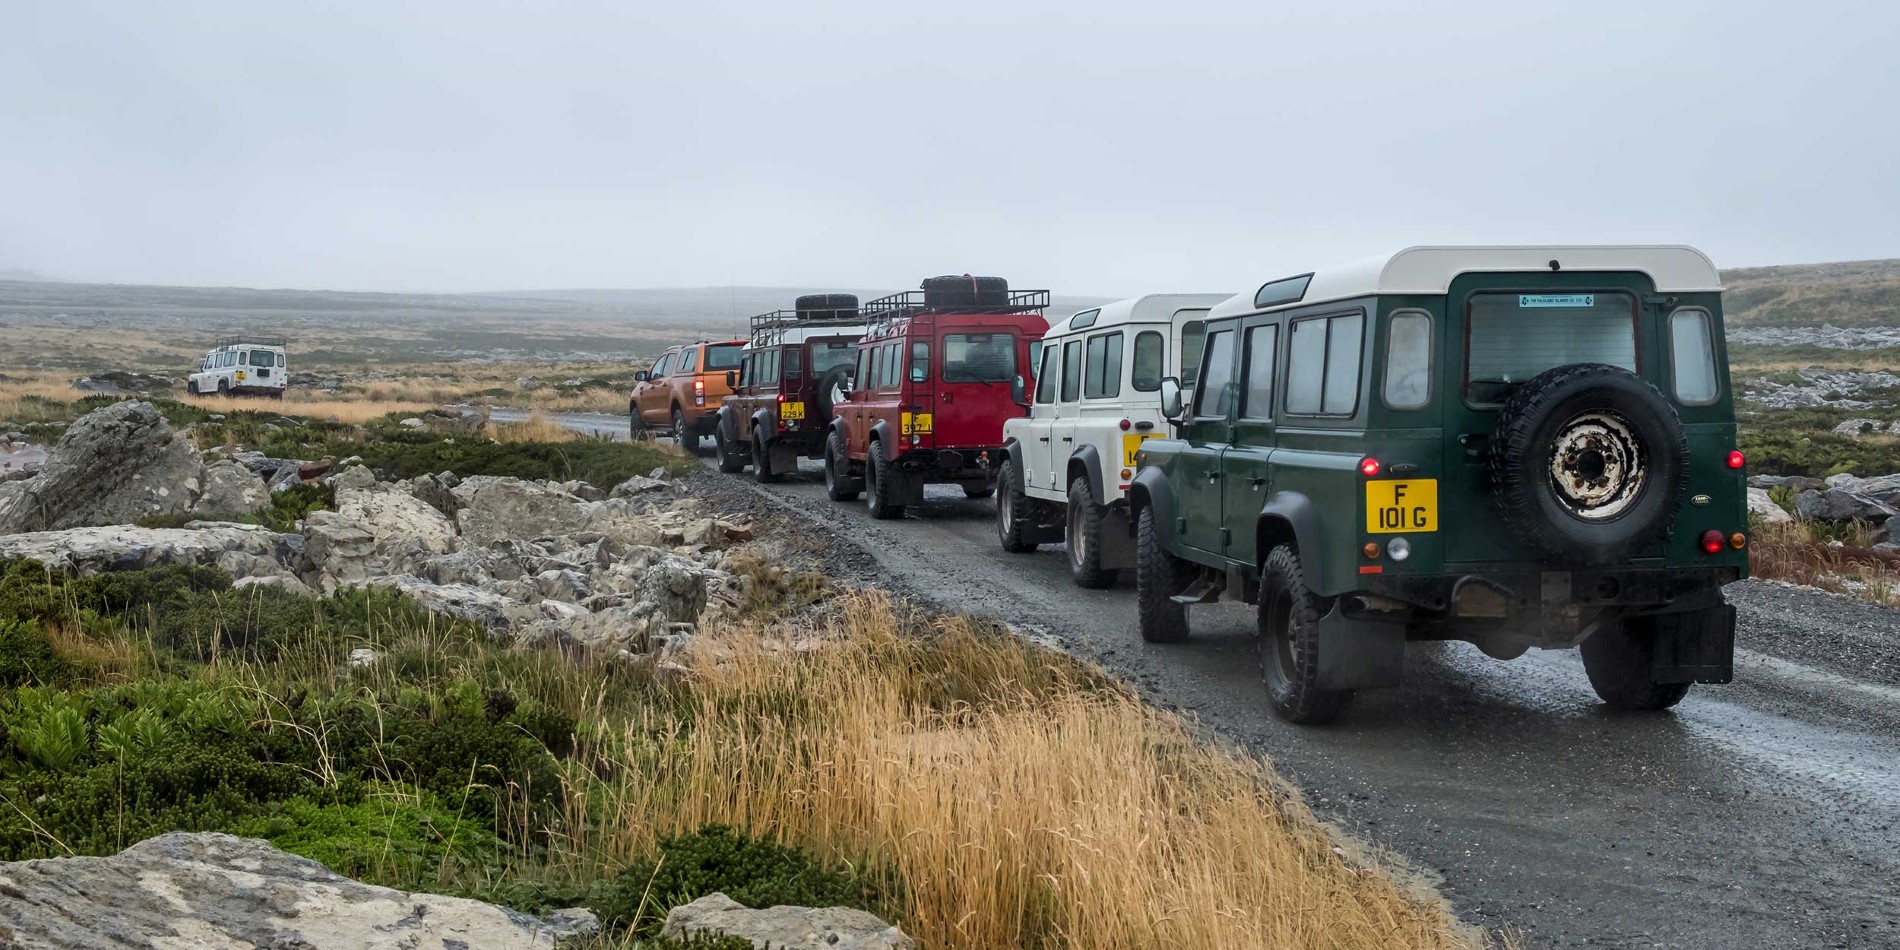 Excursion safari en jeep près de Port Stanley, Iles Falkland (Islas Malvinas) 